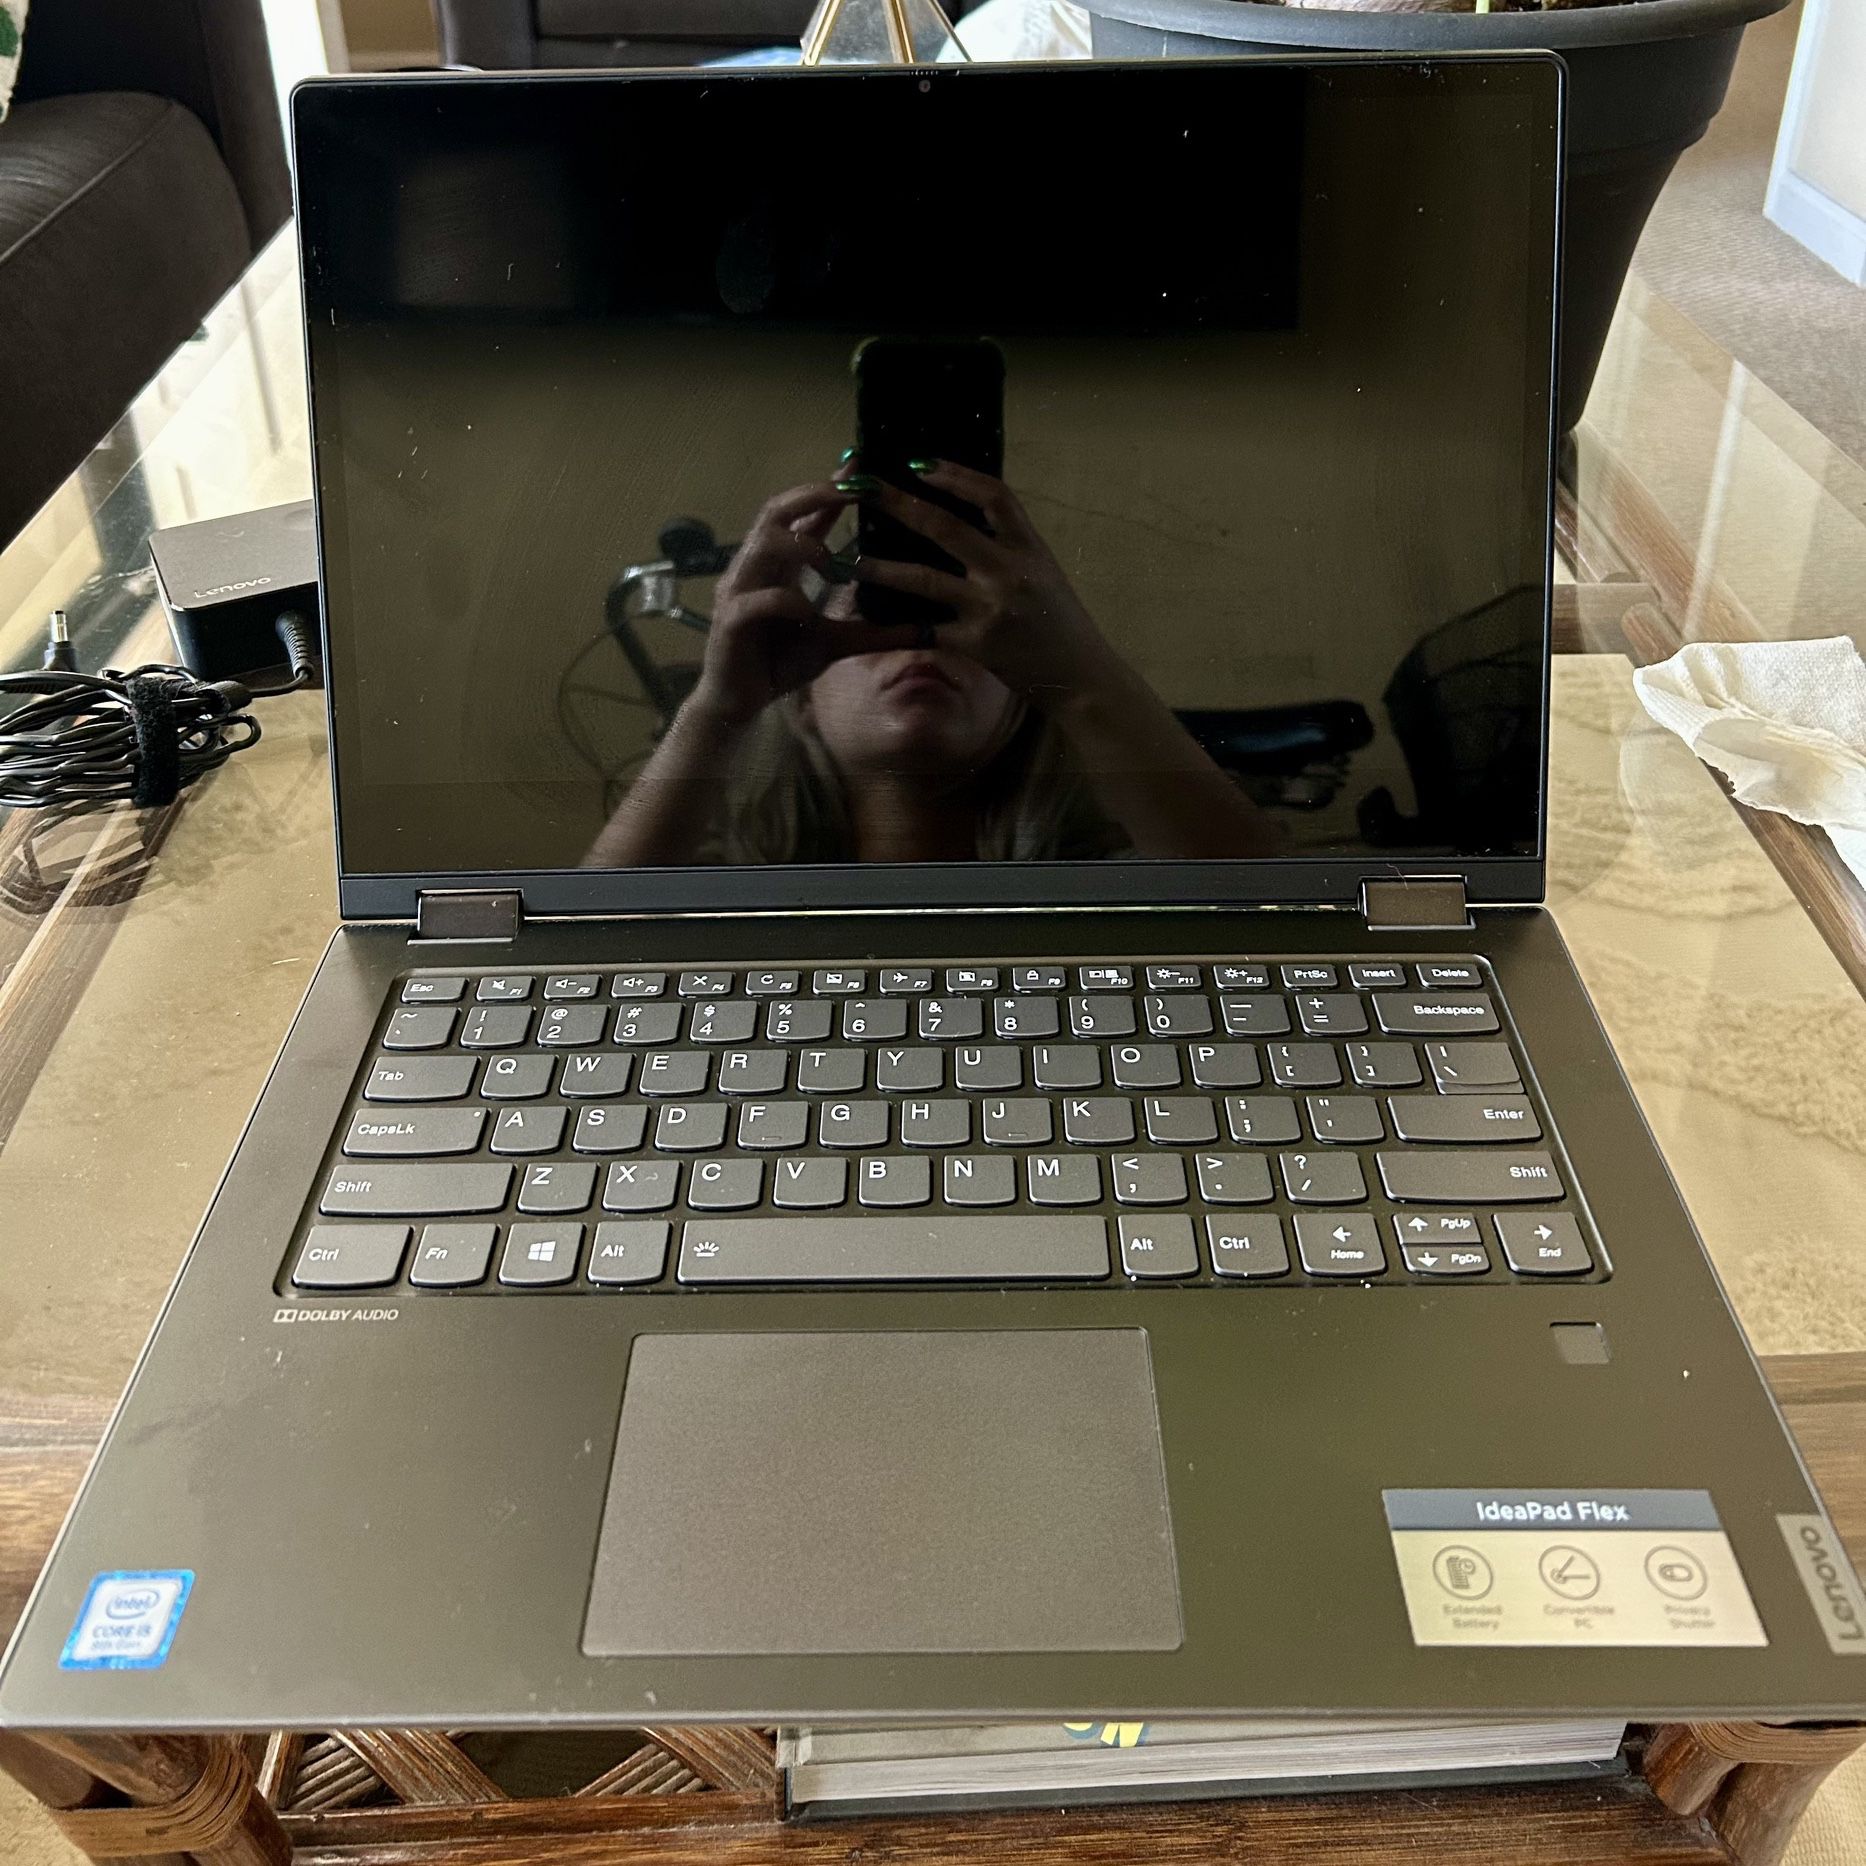 Laptop -Lenovo Idea Pad Flex 141WL